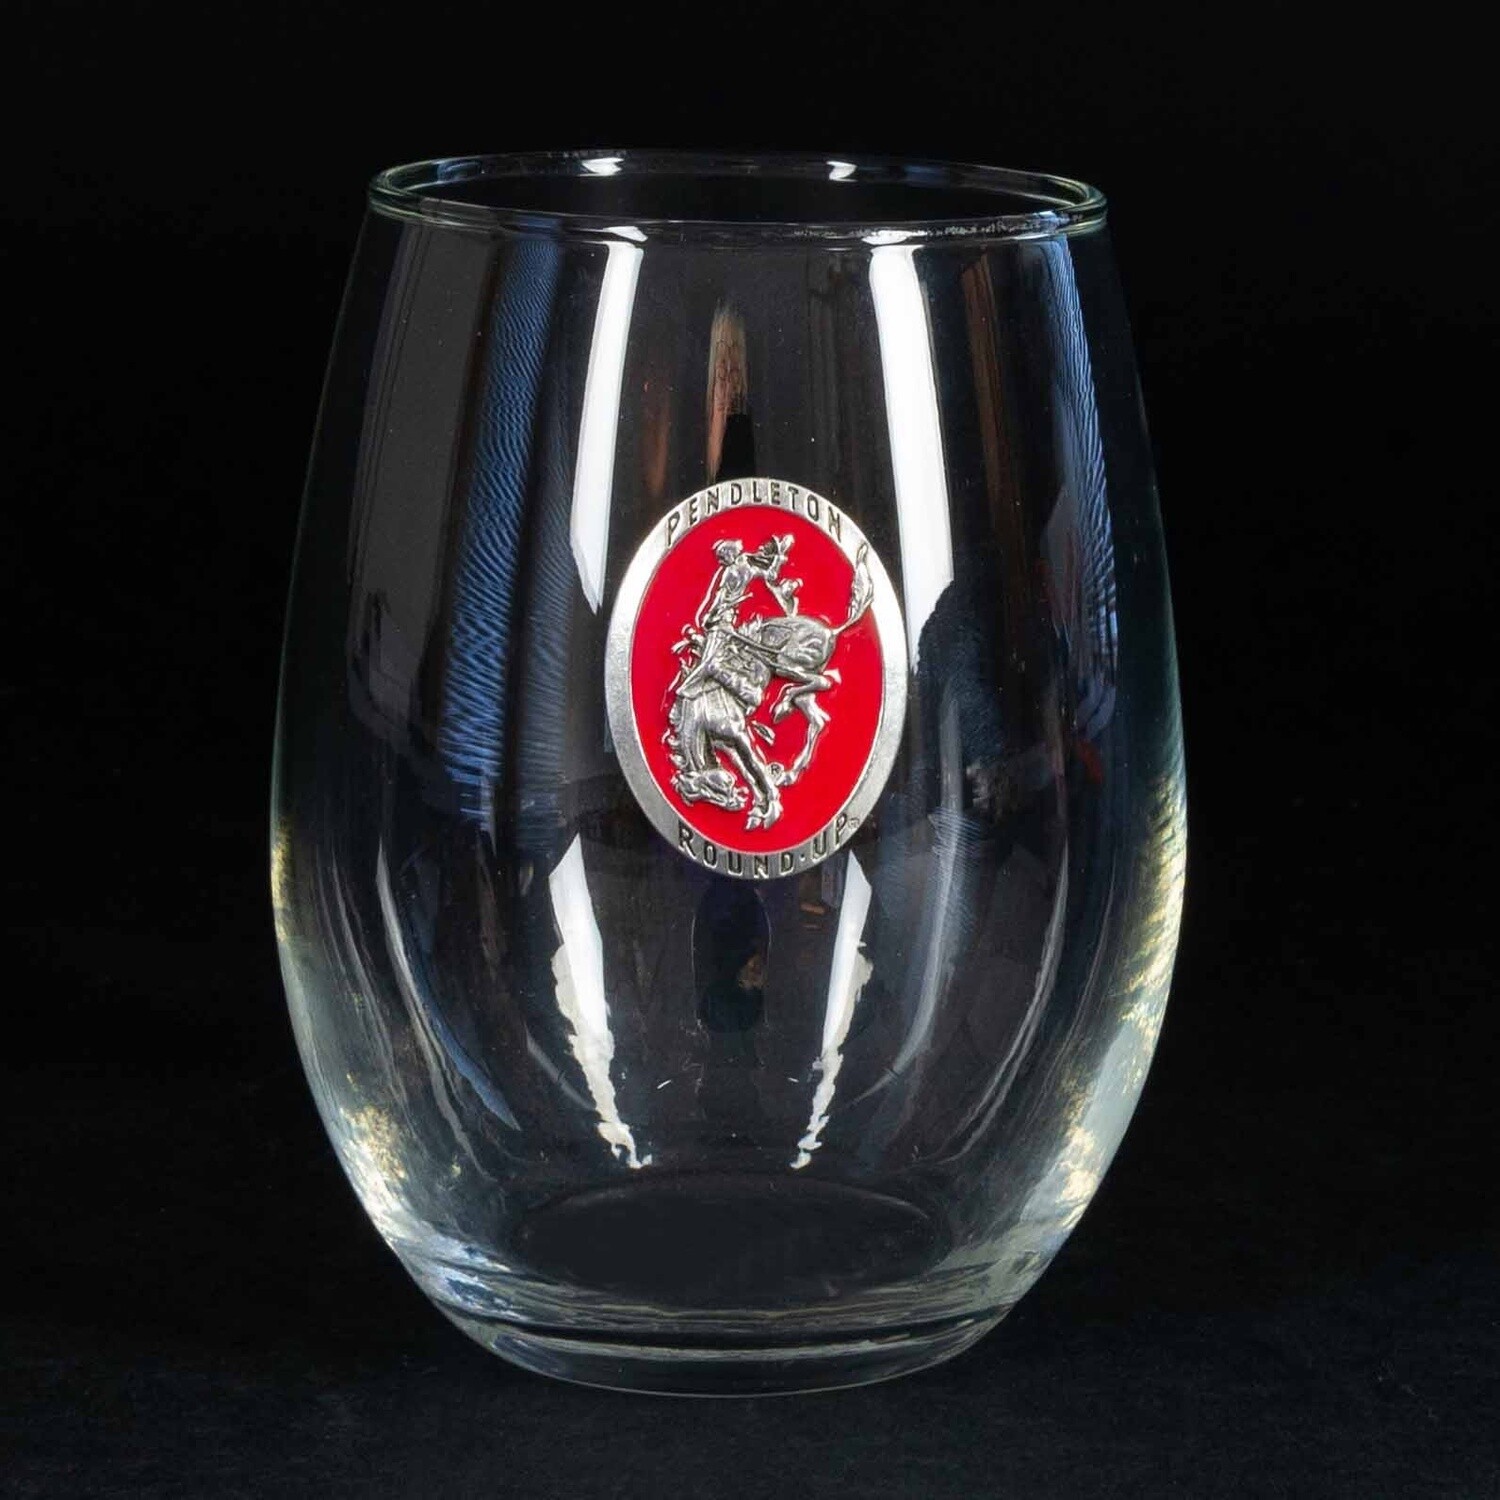 Pendleton Round-Up Pewter Stemless Wine Glass